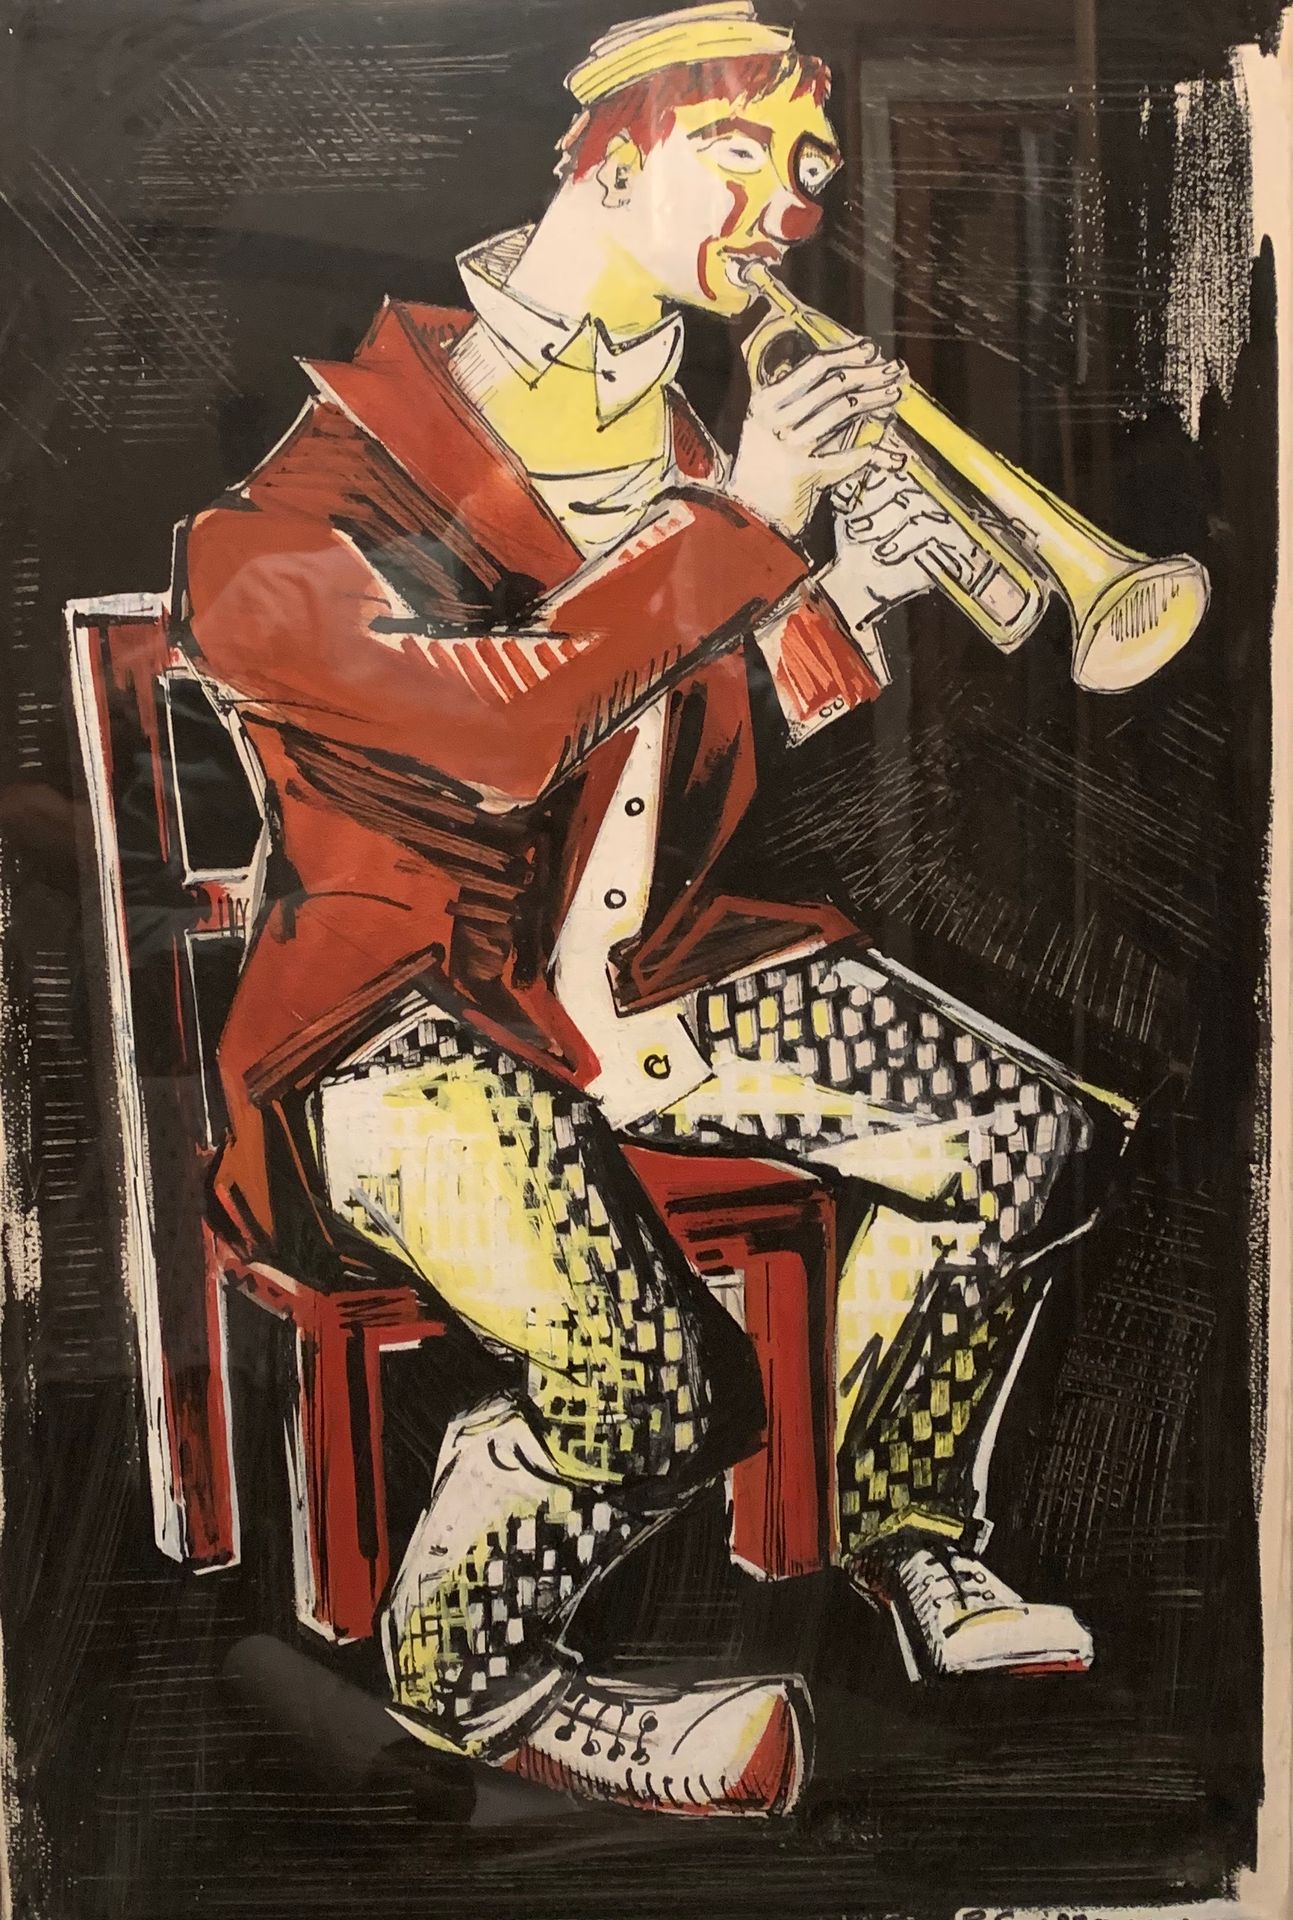 Null 罗多尔夫-凯洛（Rodolphe CAILLAUX） (1904-1989)

小号手小丑

右下角有签名的水墨和水粉画